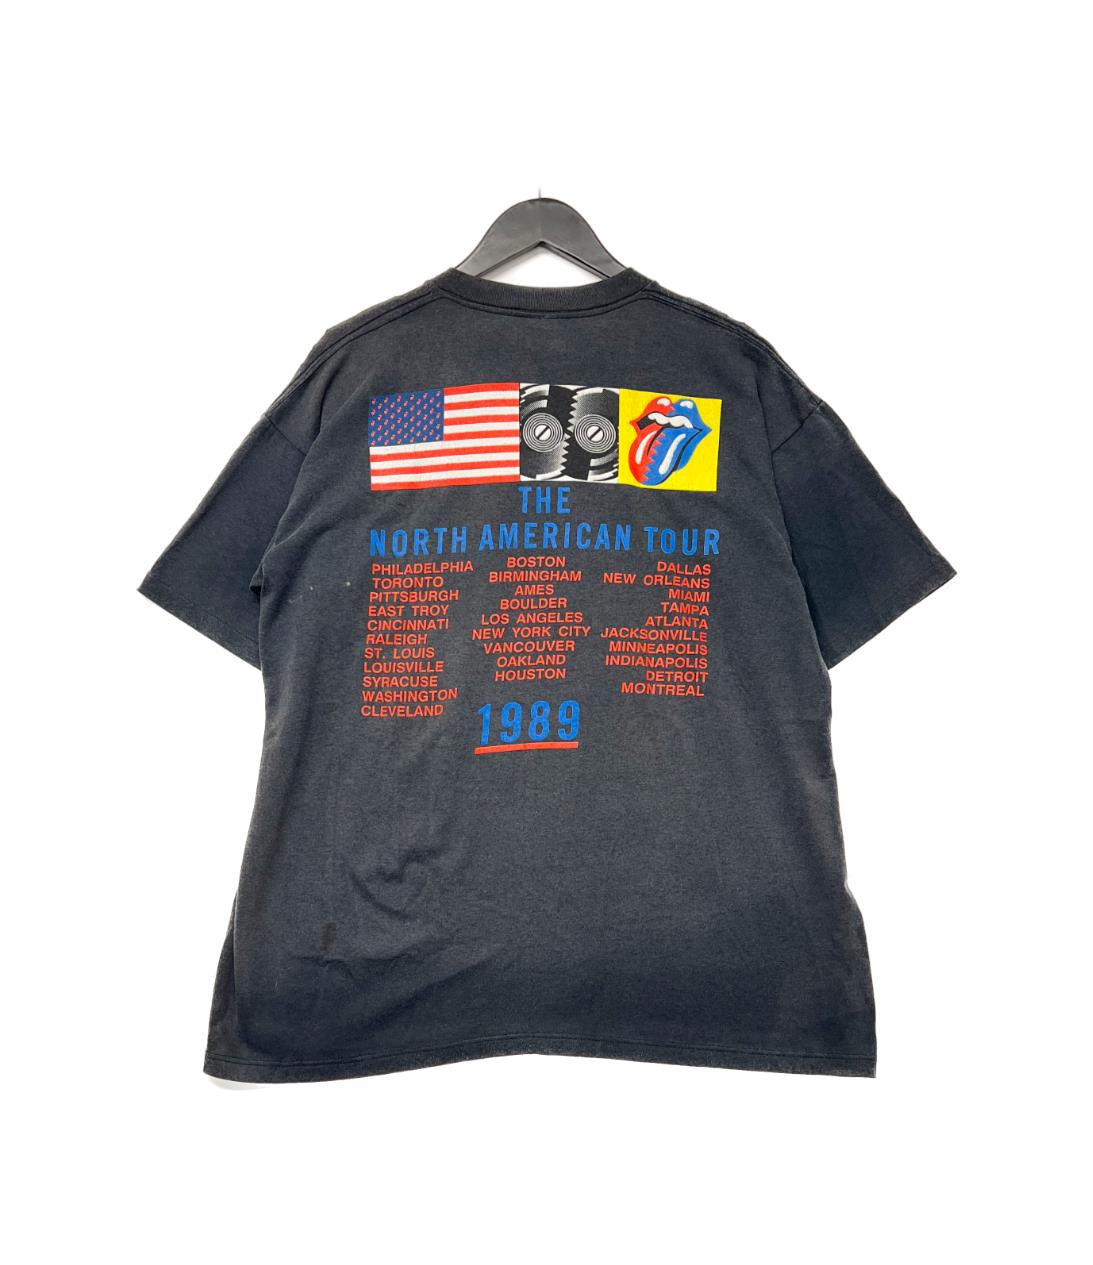 Rolling Stones T-shirt Size XL